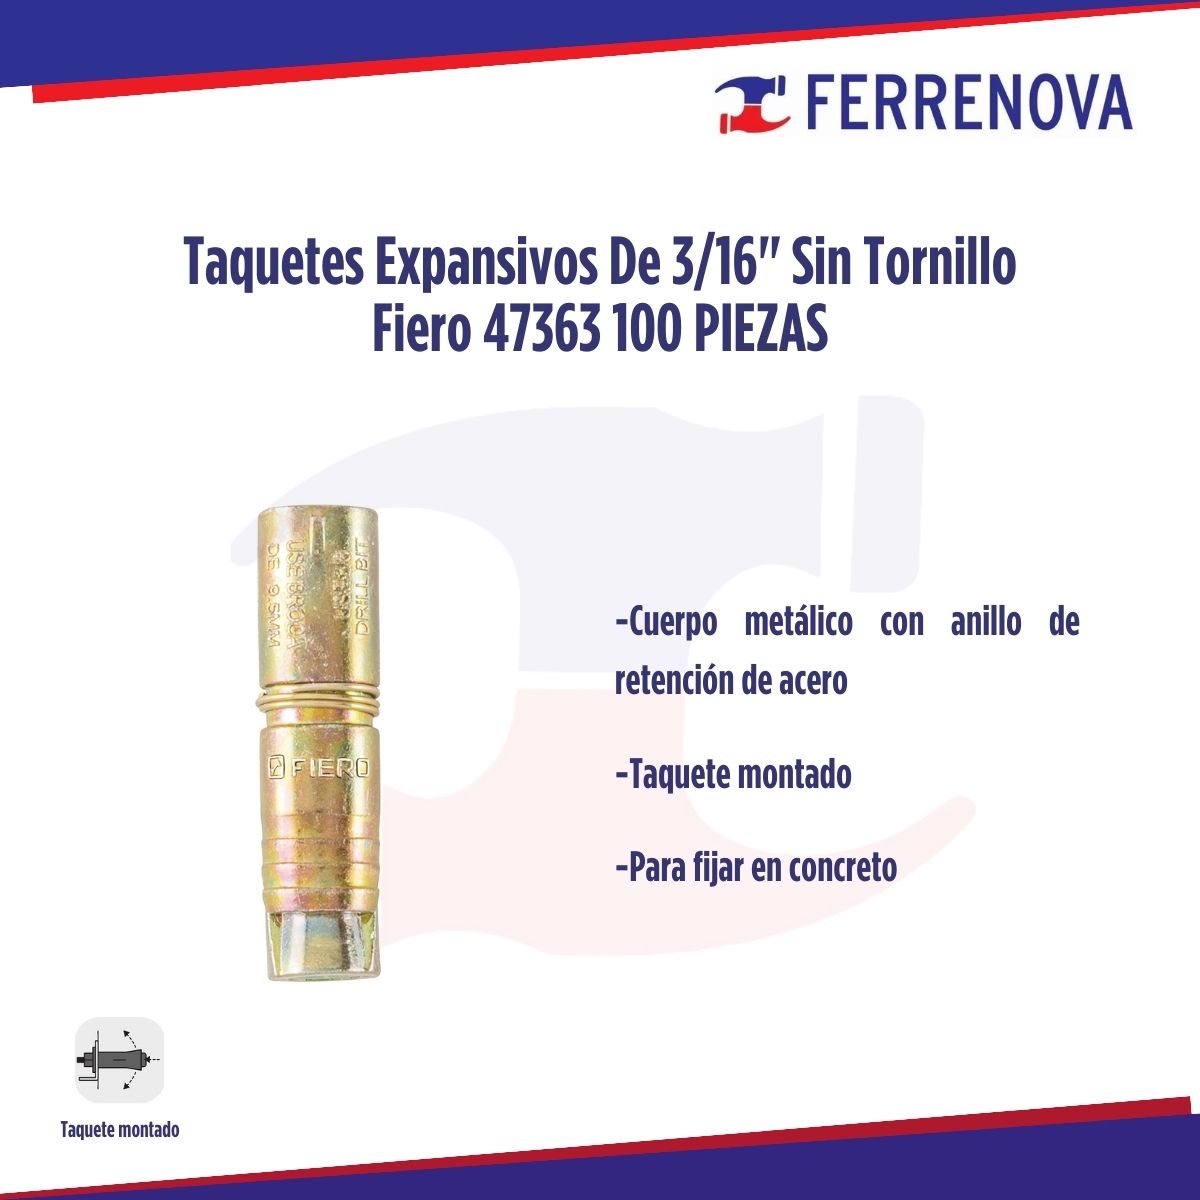 Taquetes Expansivos De 3/16" Sin Tornillo  Fiero 47363 100 PIEZAS